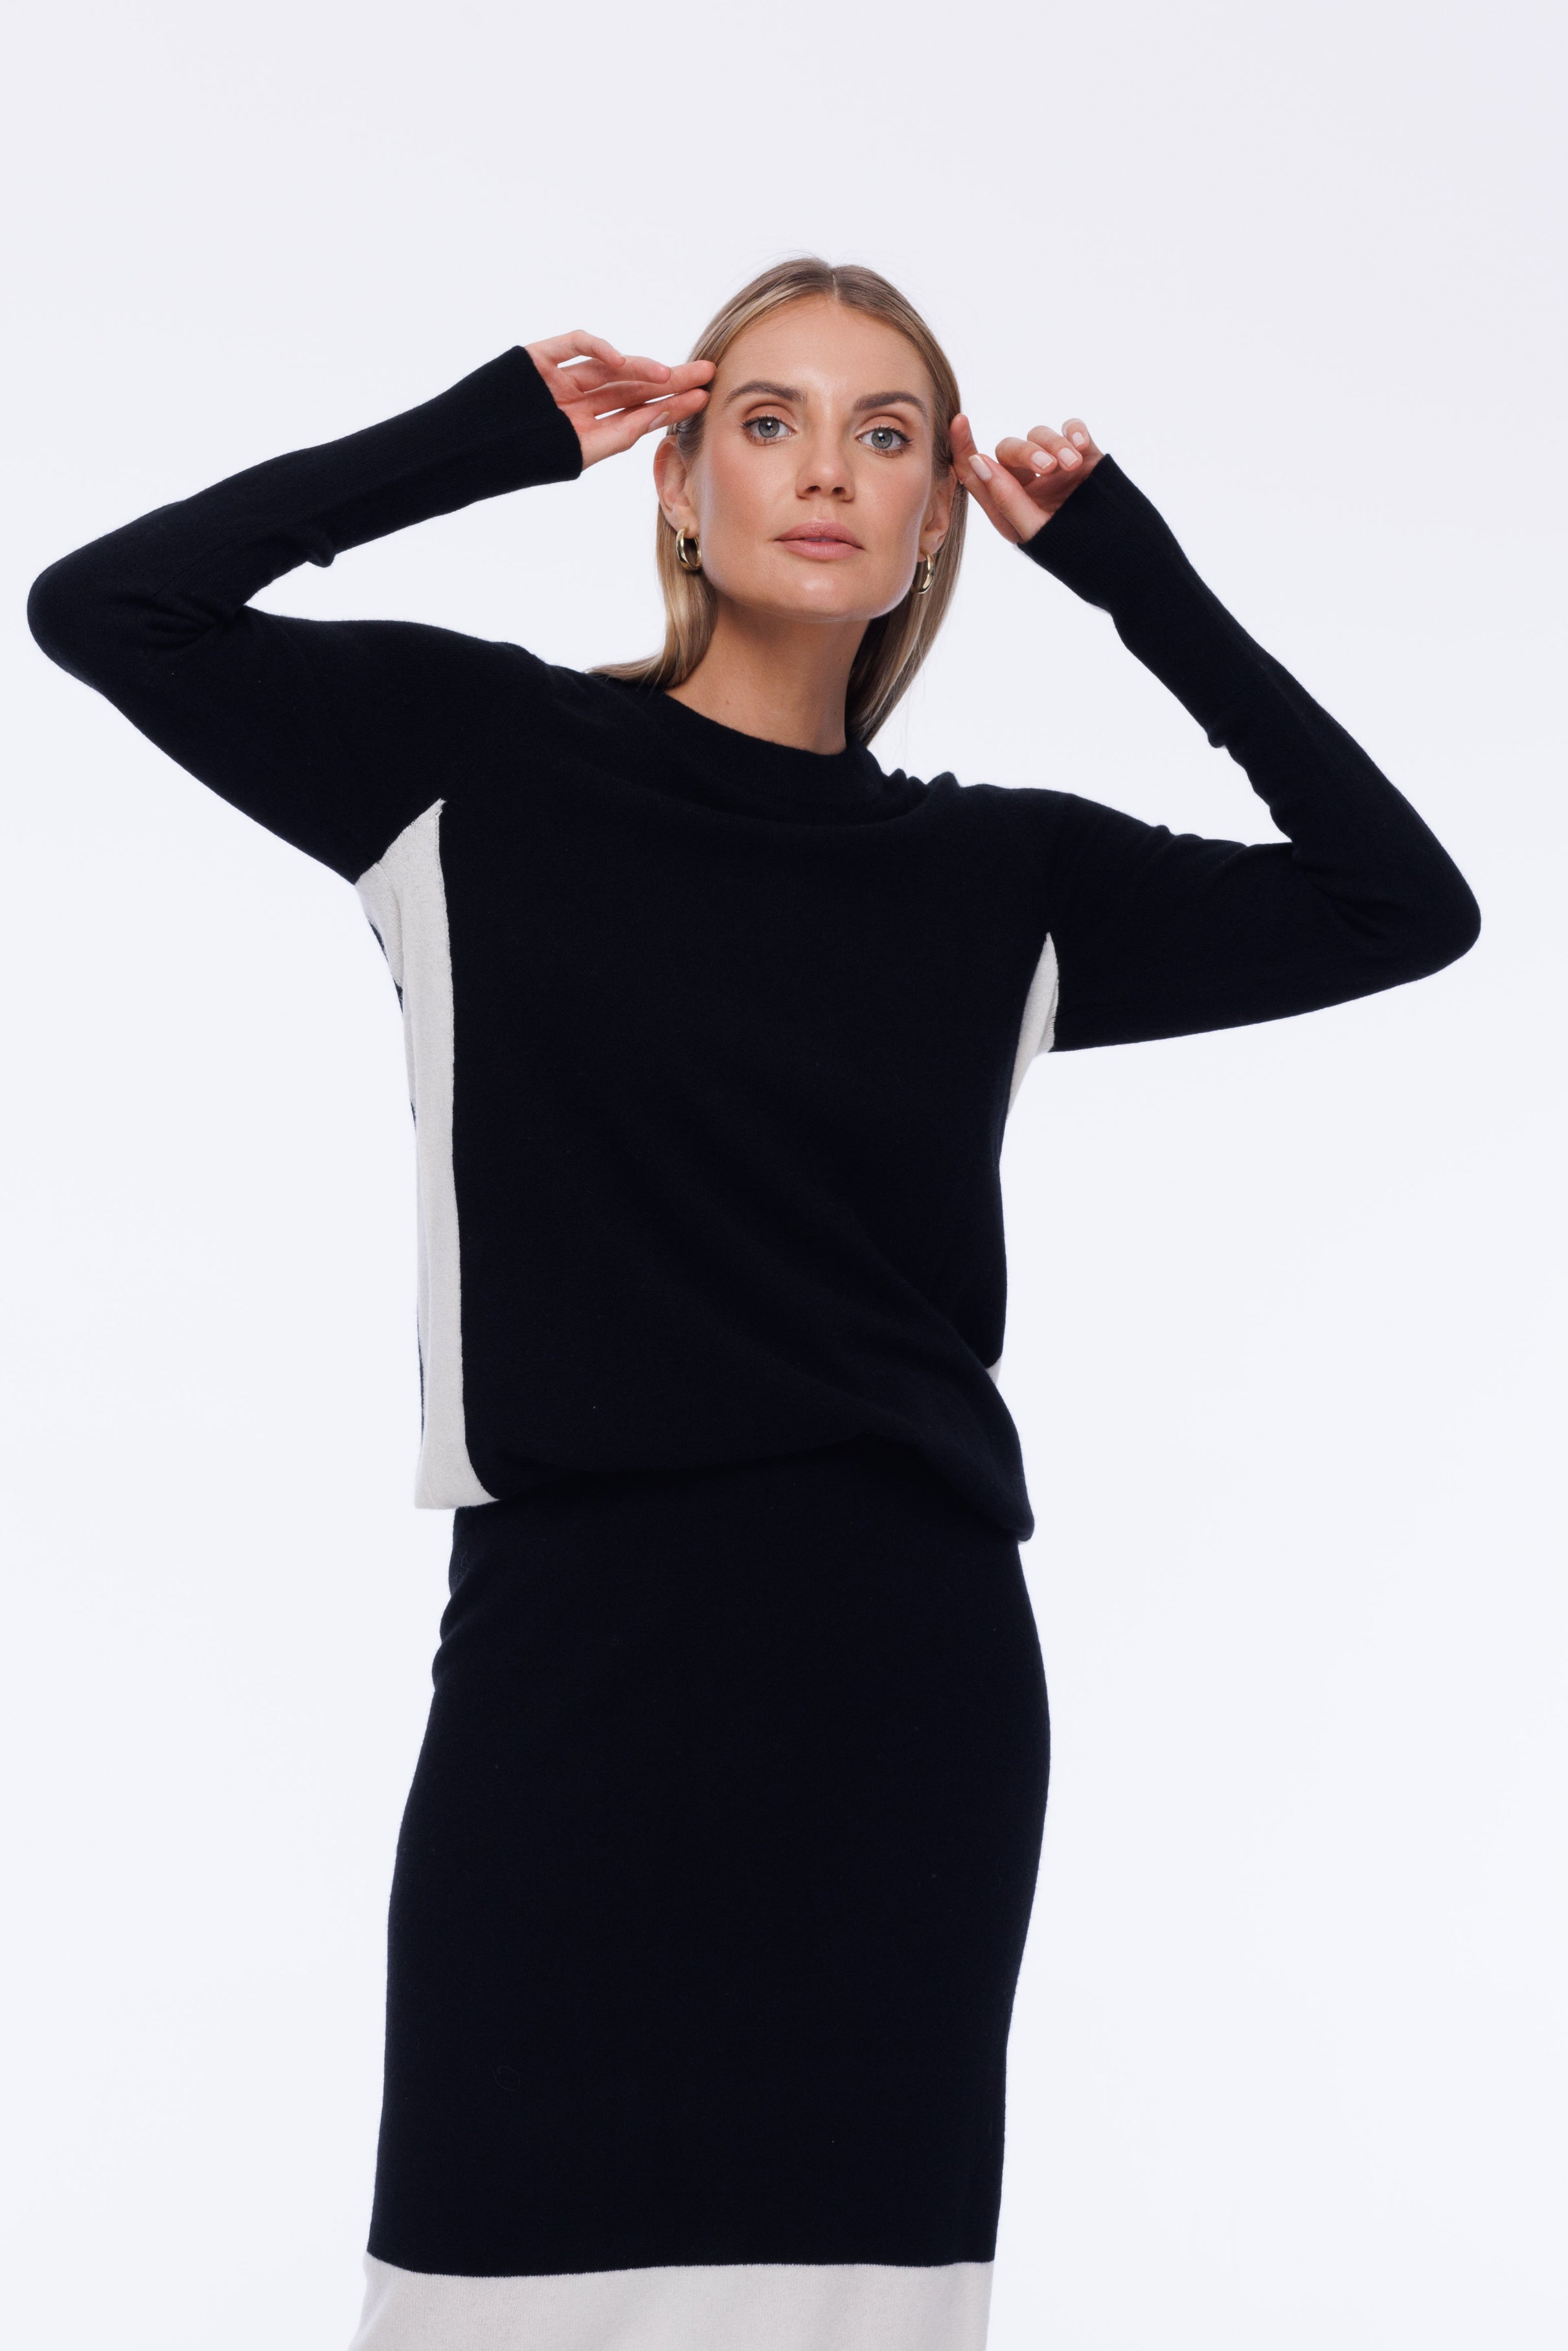 Mesmerise Sweater - Black/White Stripe